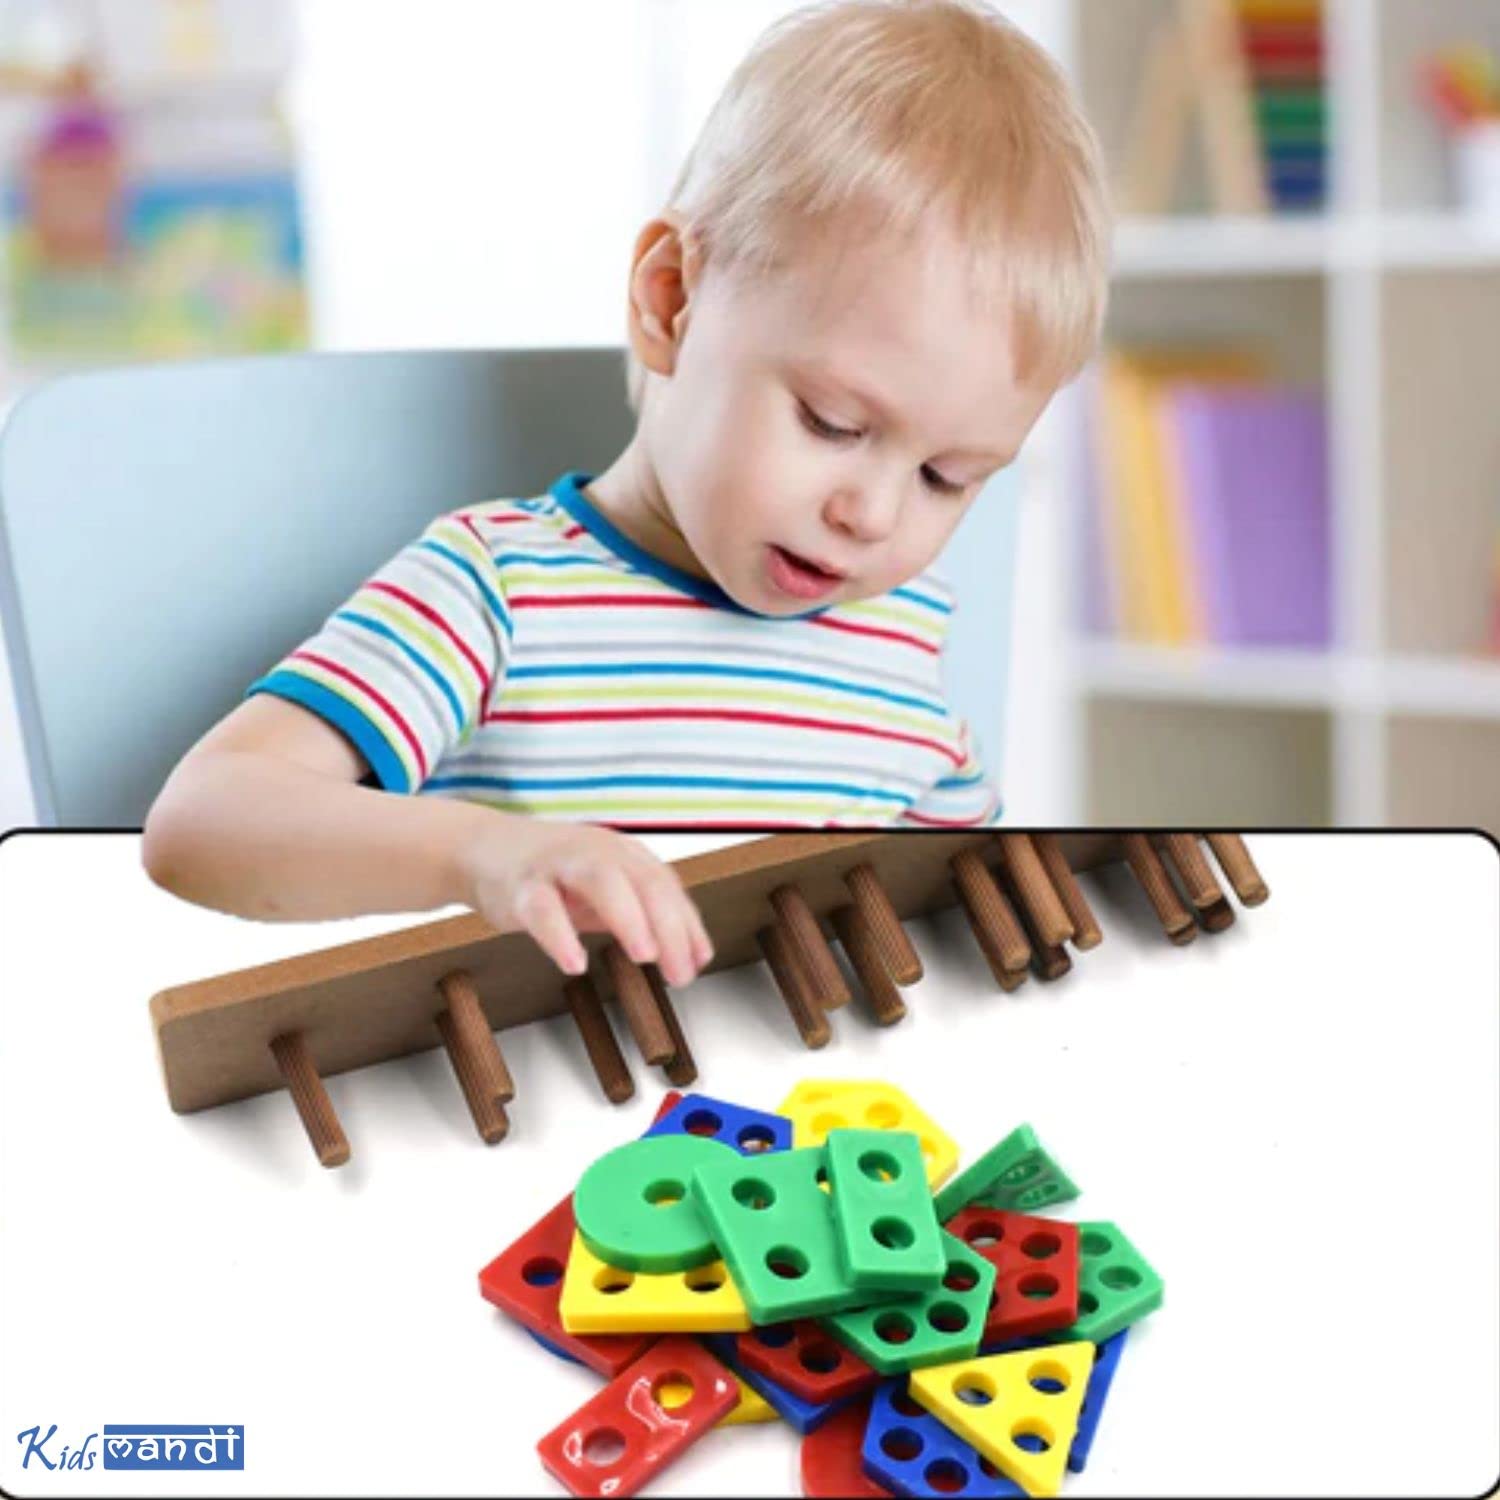 Kids Mandi Geometrix Board for Toddlers Educational Toy